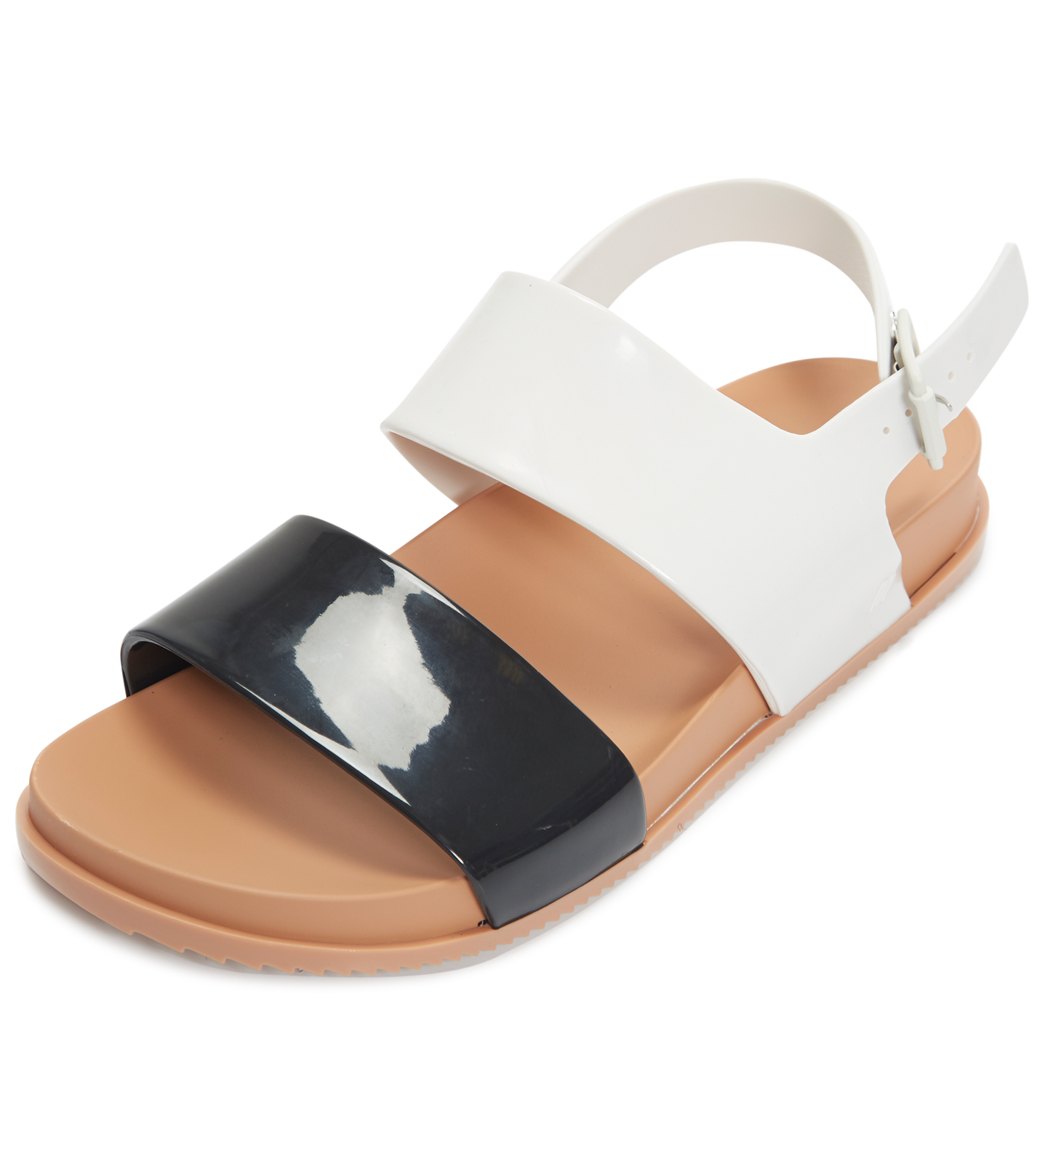 Mel By Melissa Cosmic Iii Fashion Sandals - Black/White 6 - Swimoutlet.com